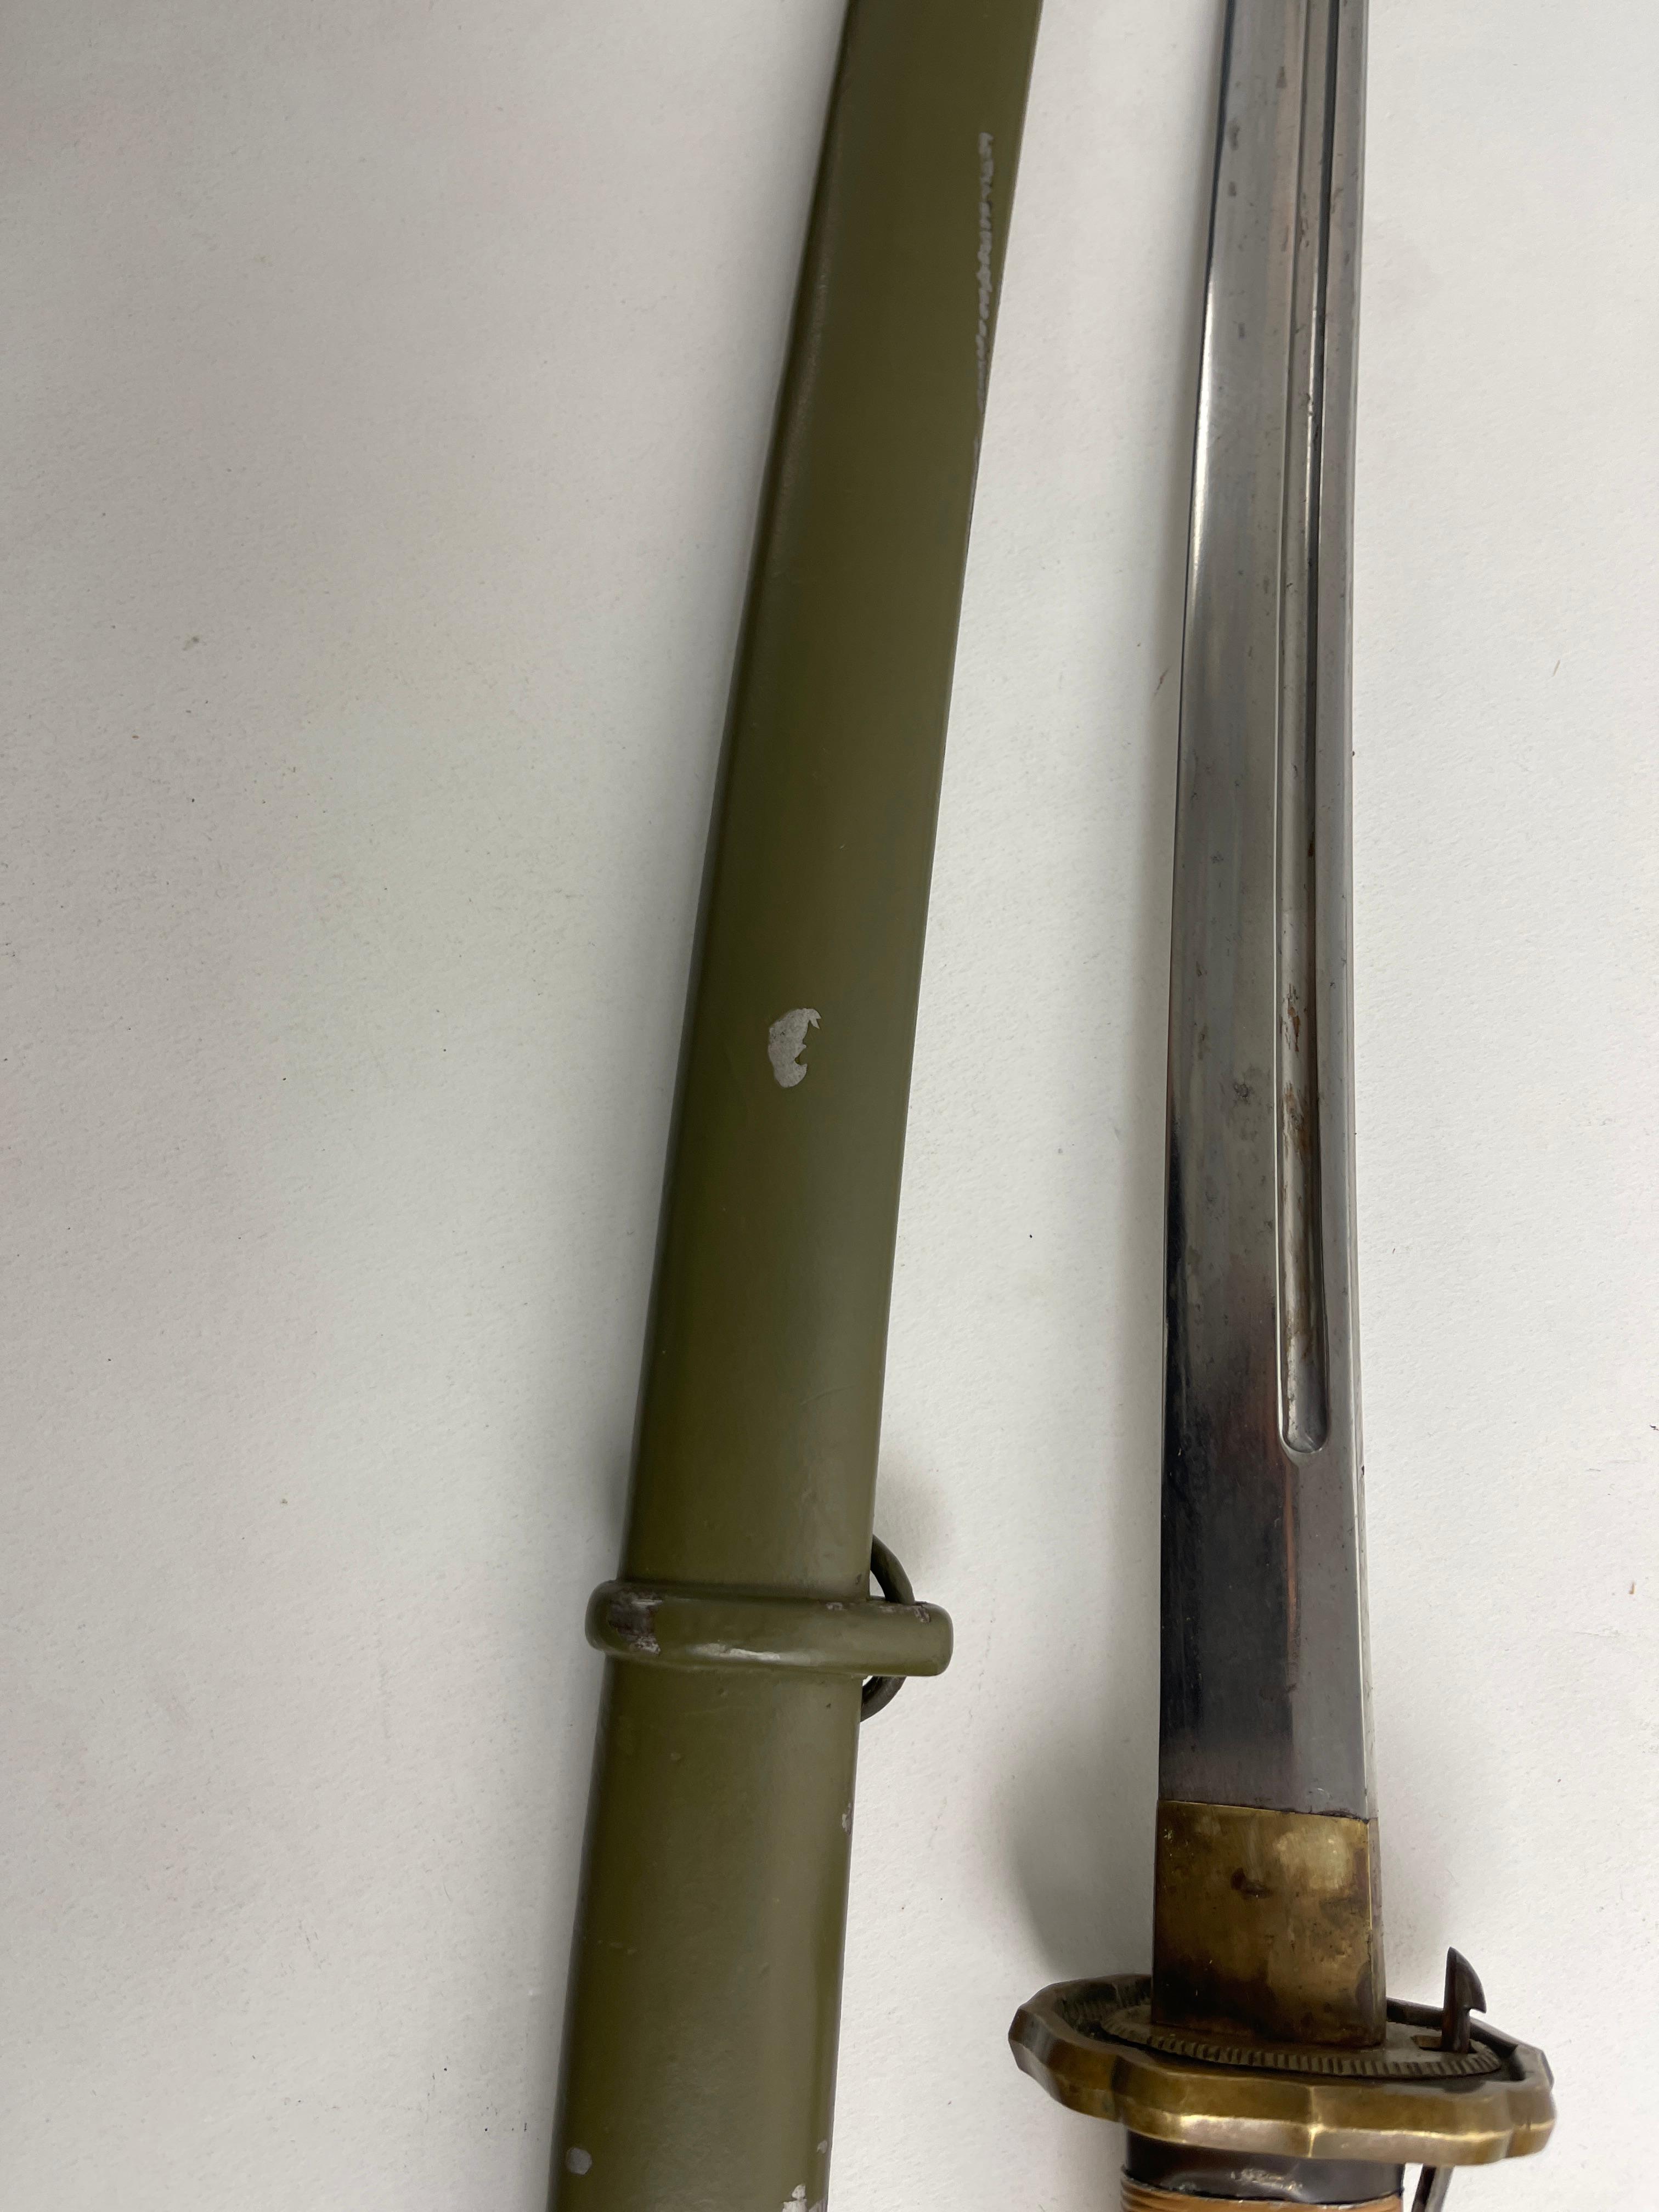 JAPANESE SAMURAI KATANA ANTIQUE SWORD